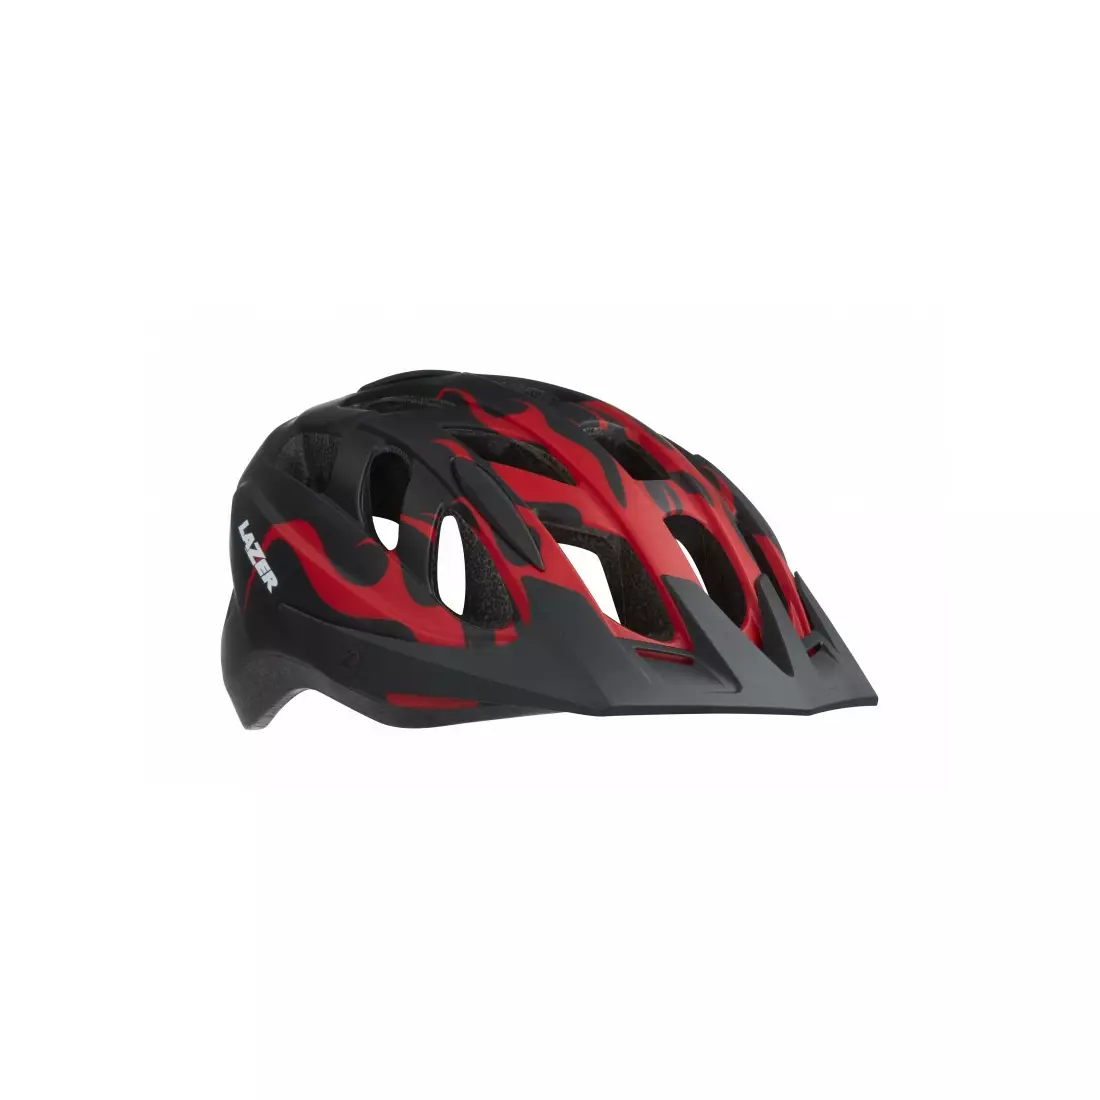 LAZER children's/junior bicycle helmet j1 red flames black-red BLC2197885186